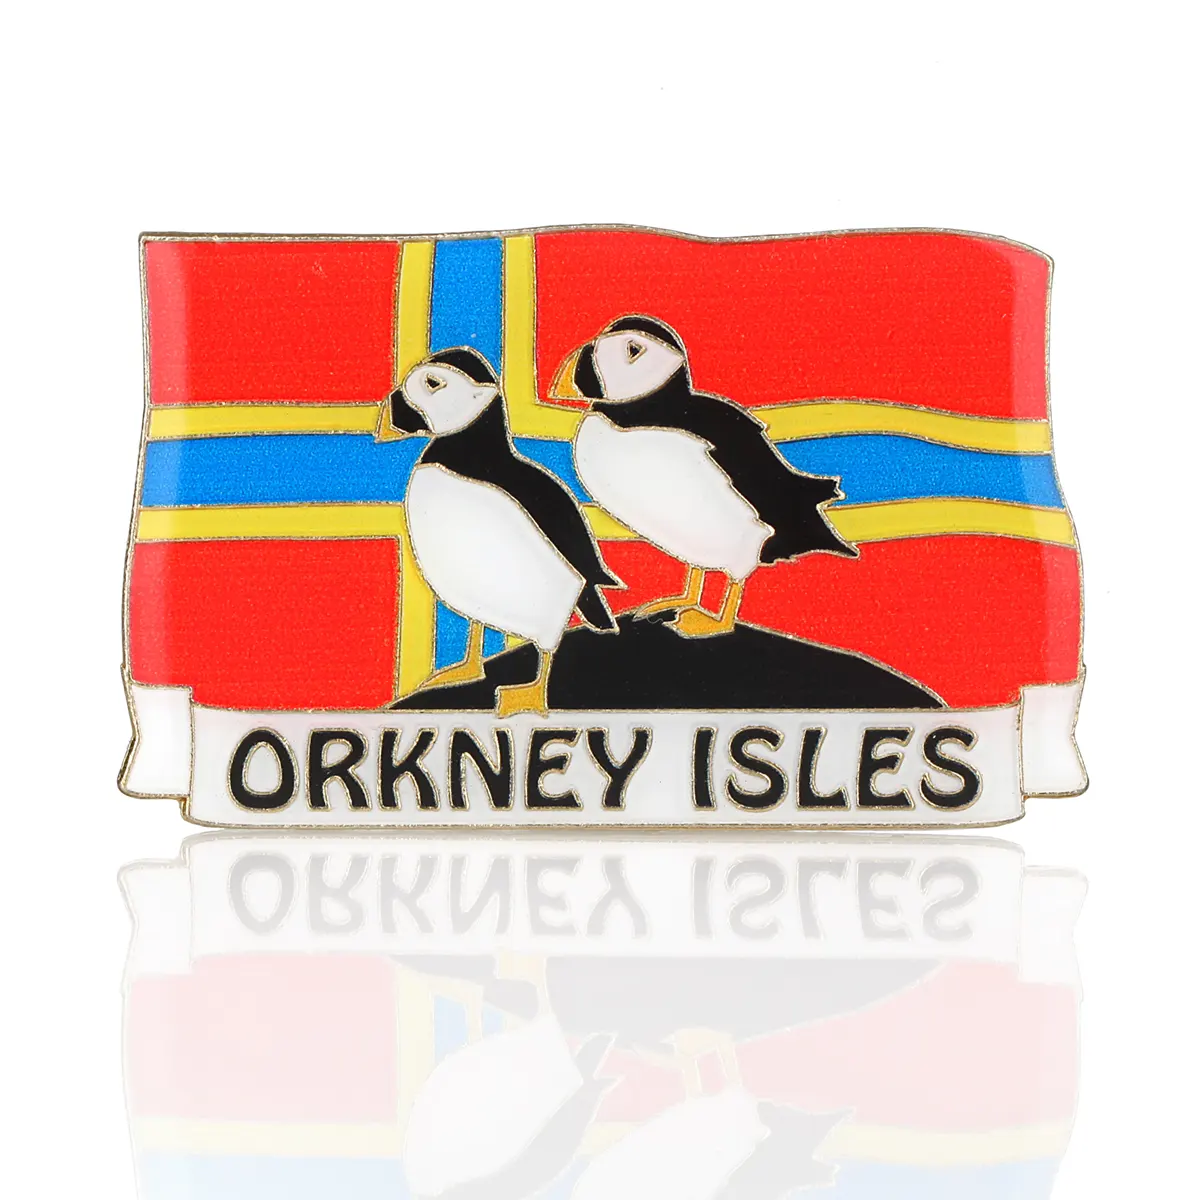 Orkney Isles Deko Magnet / Kühlschrankmagnet aus Schottland - Metall & Emaille